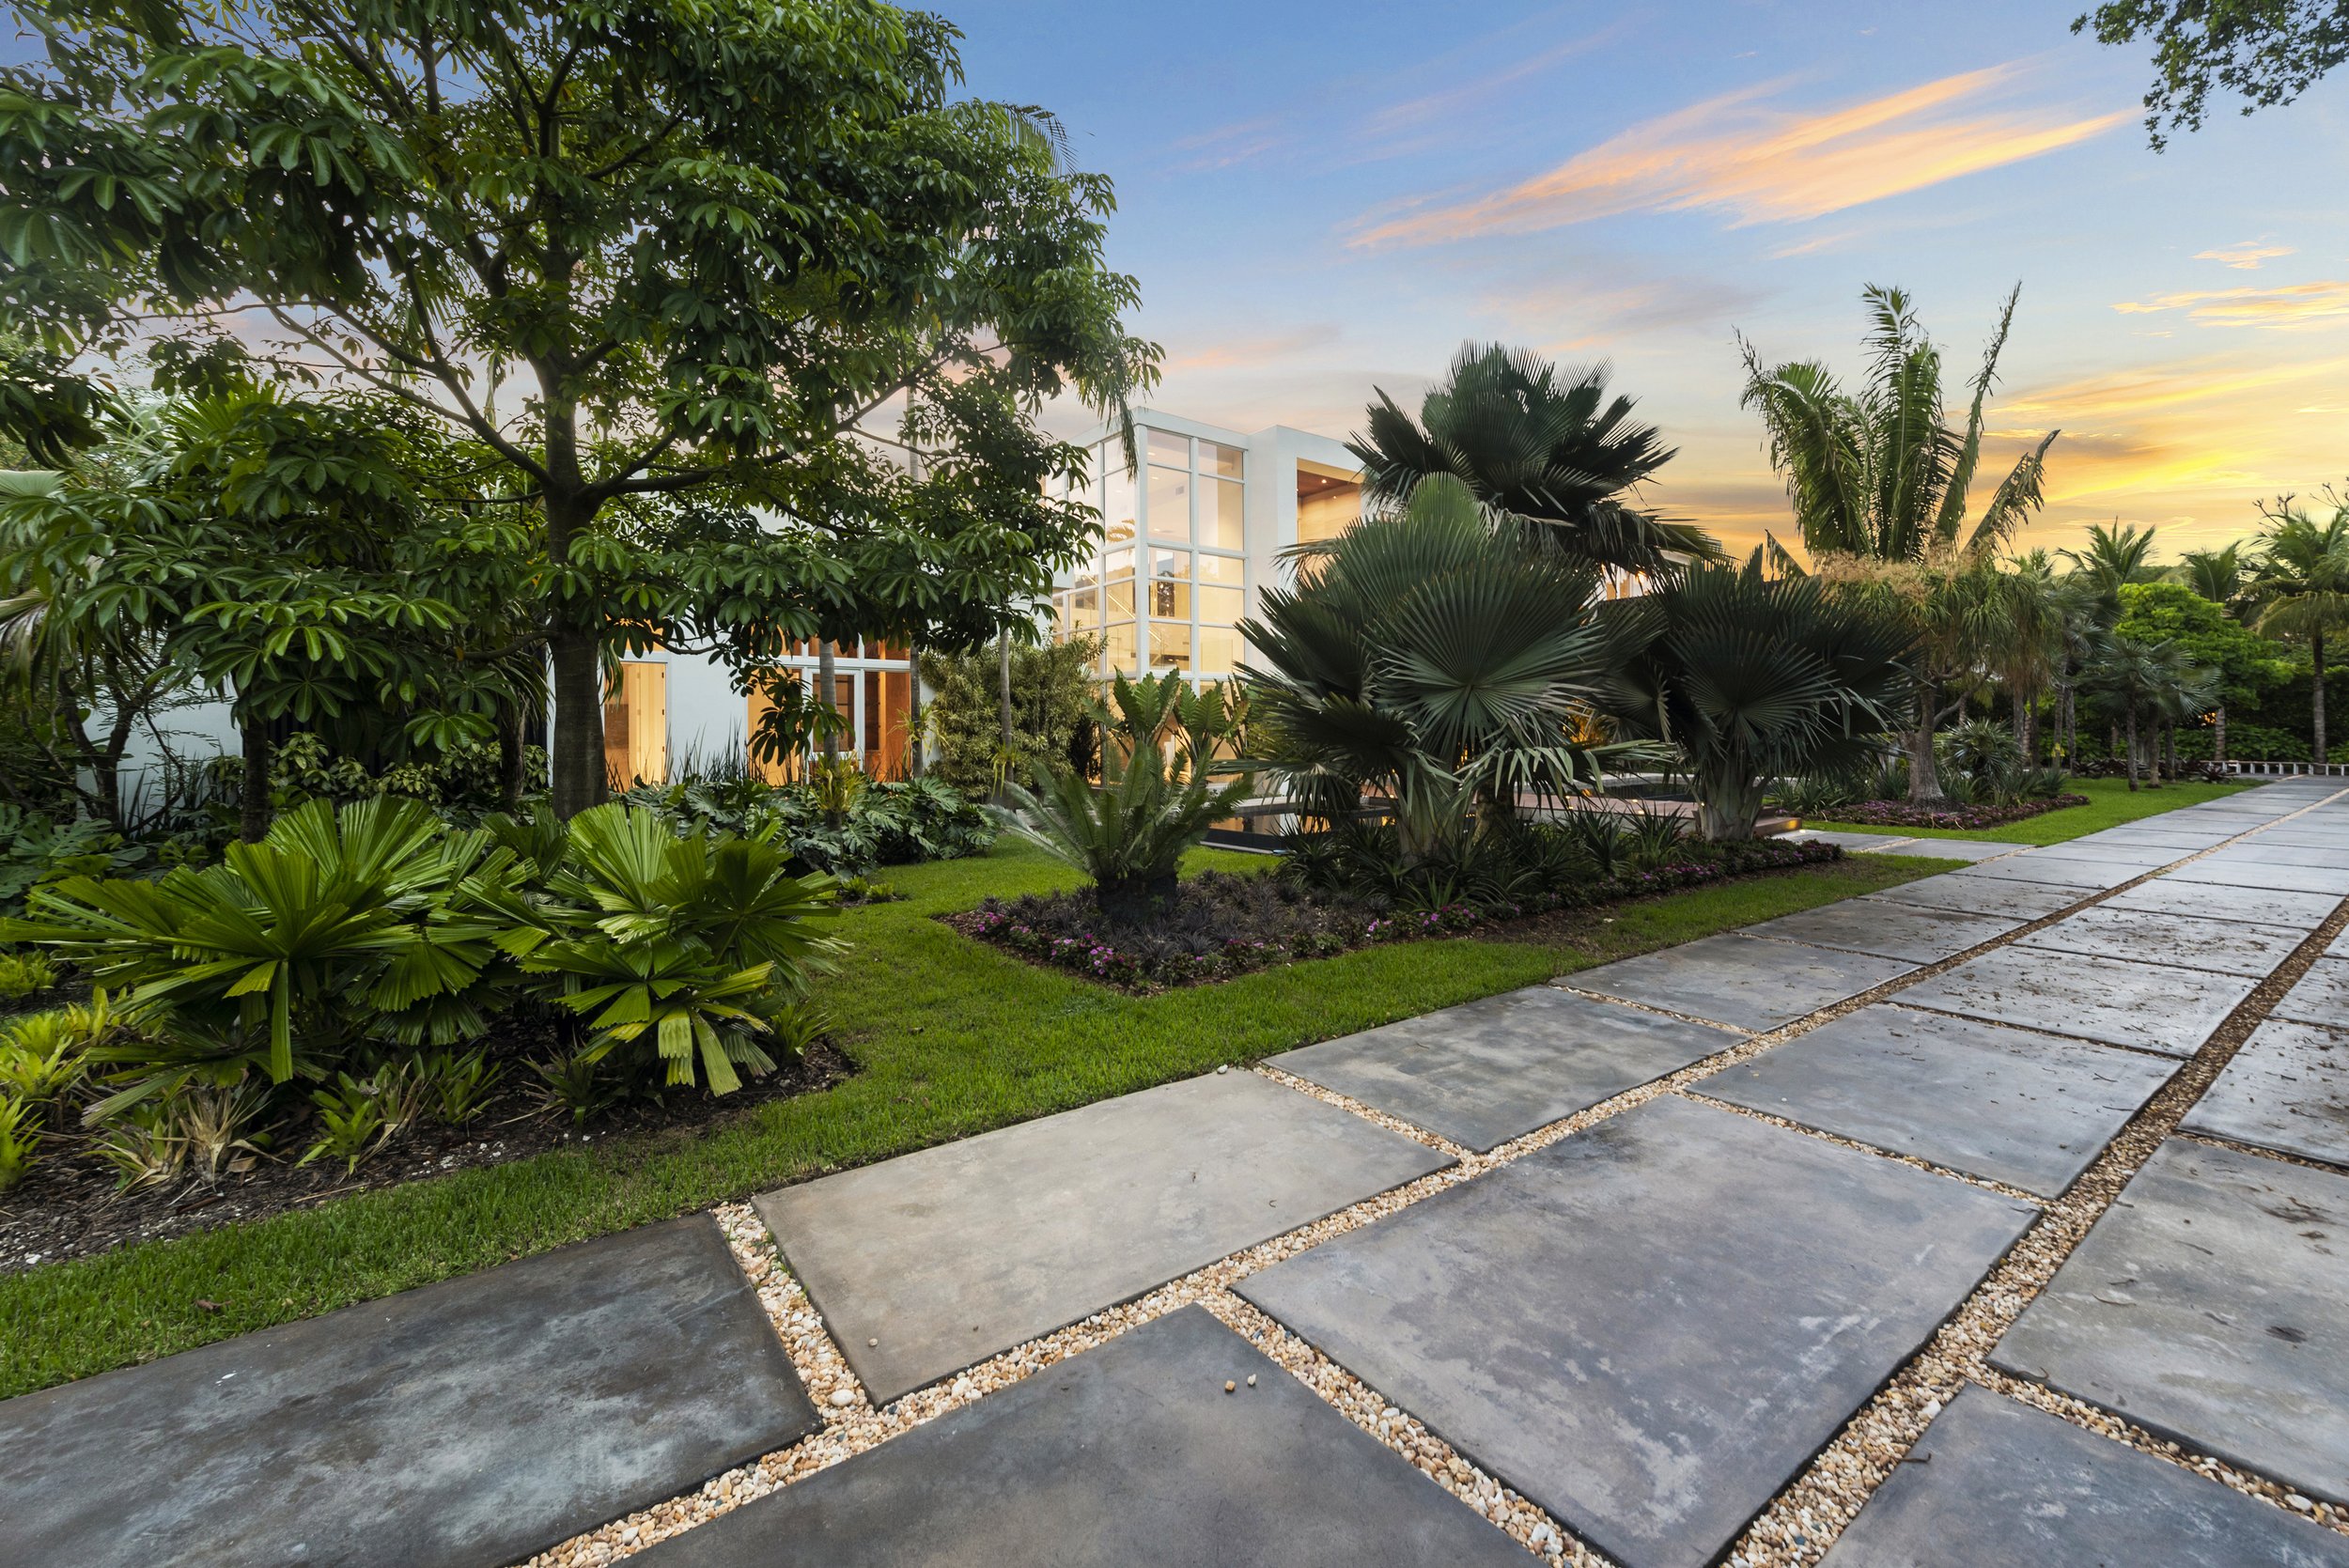 Miami Heat Star Tyler Herro Buys Pinecrest Mansion For Record $10.5 Million 2.jpg